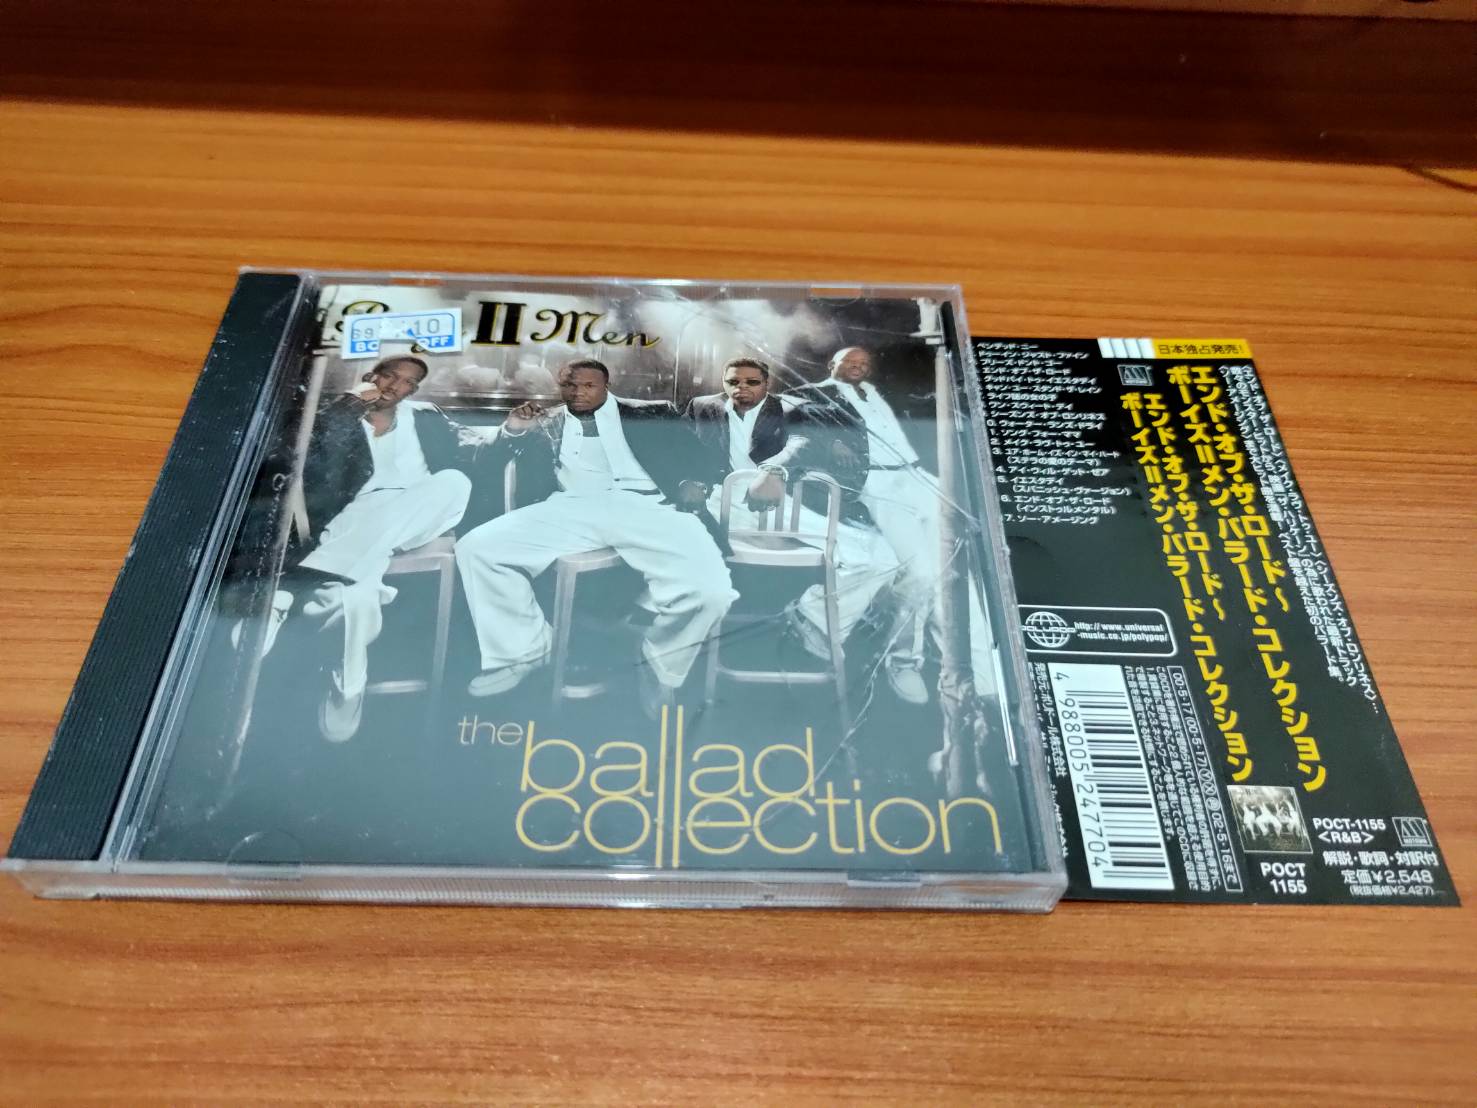 CD.MUSIC ซีดีเพลง เพลงสากล Boyz Mem The ballad collestion